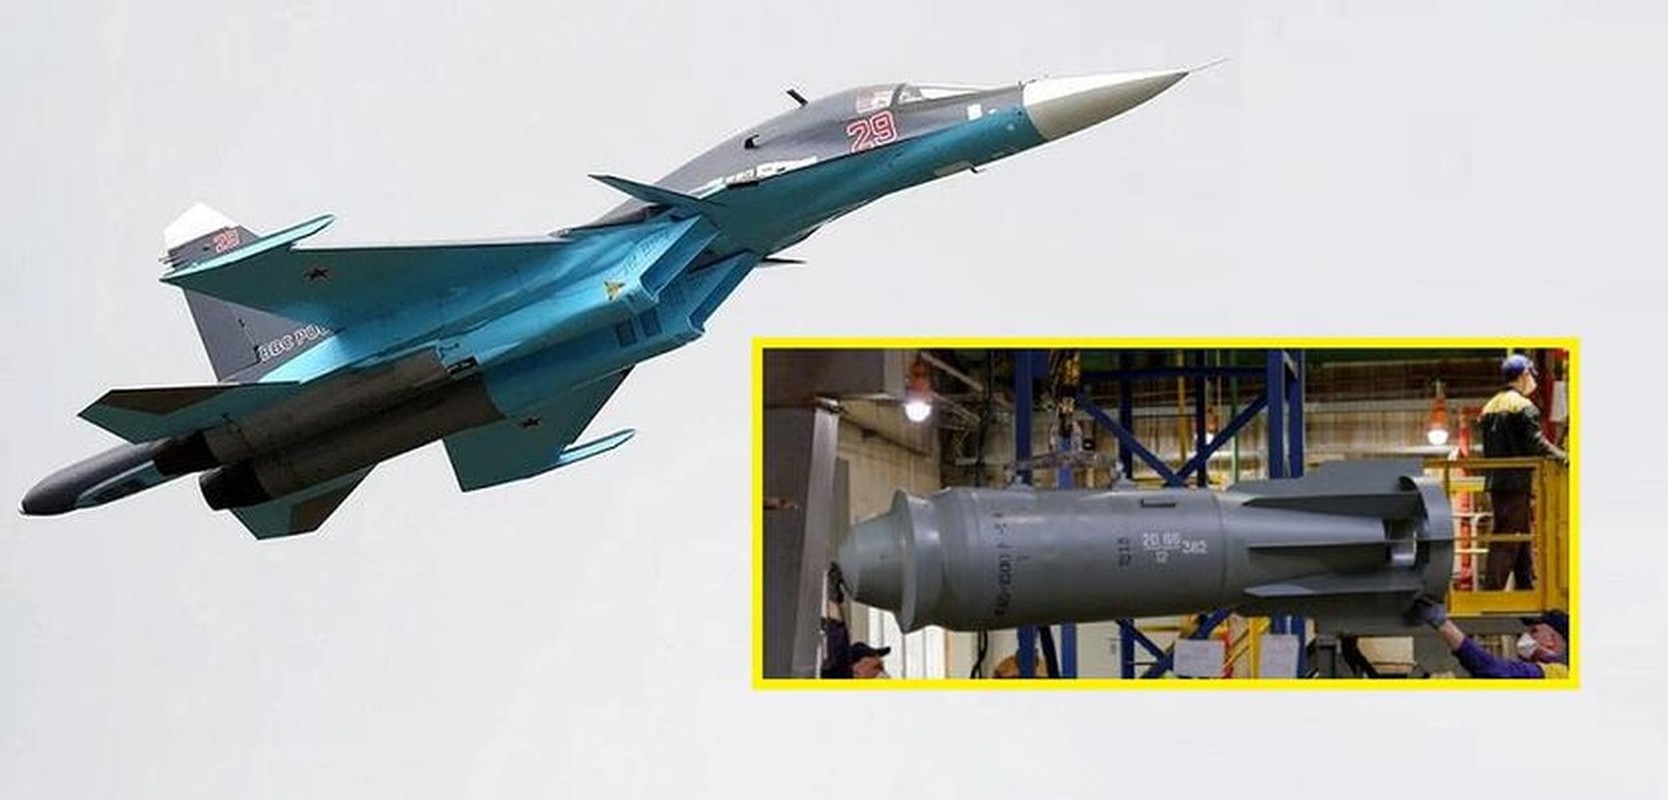 Voi bom luon, Su-34 cua Nga thuc su tro thanh “hung than”